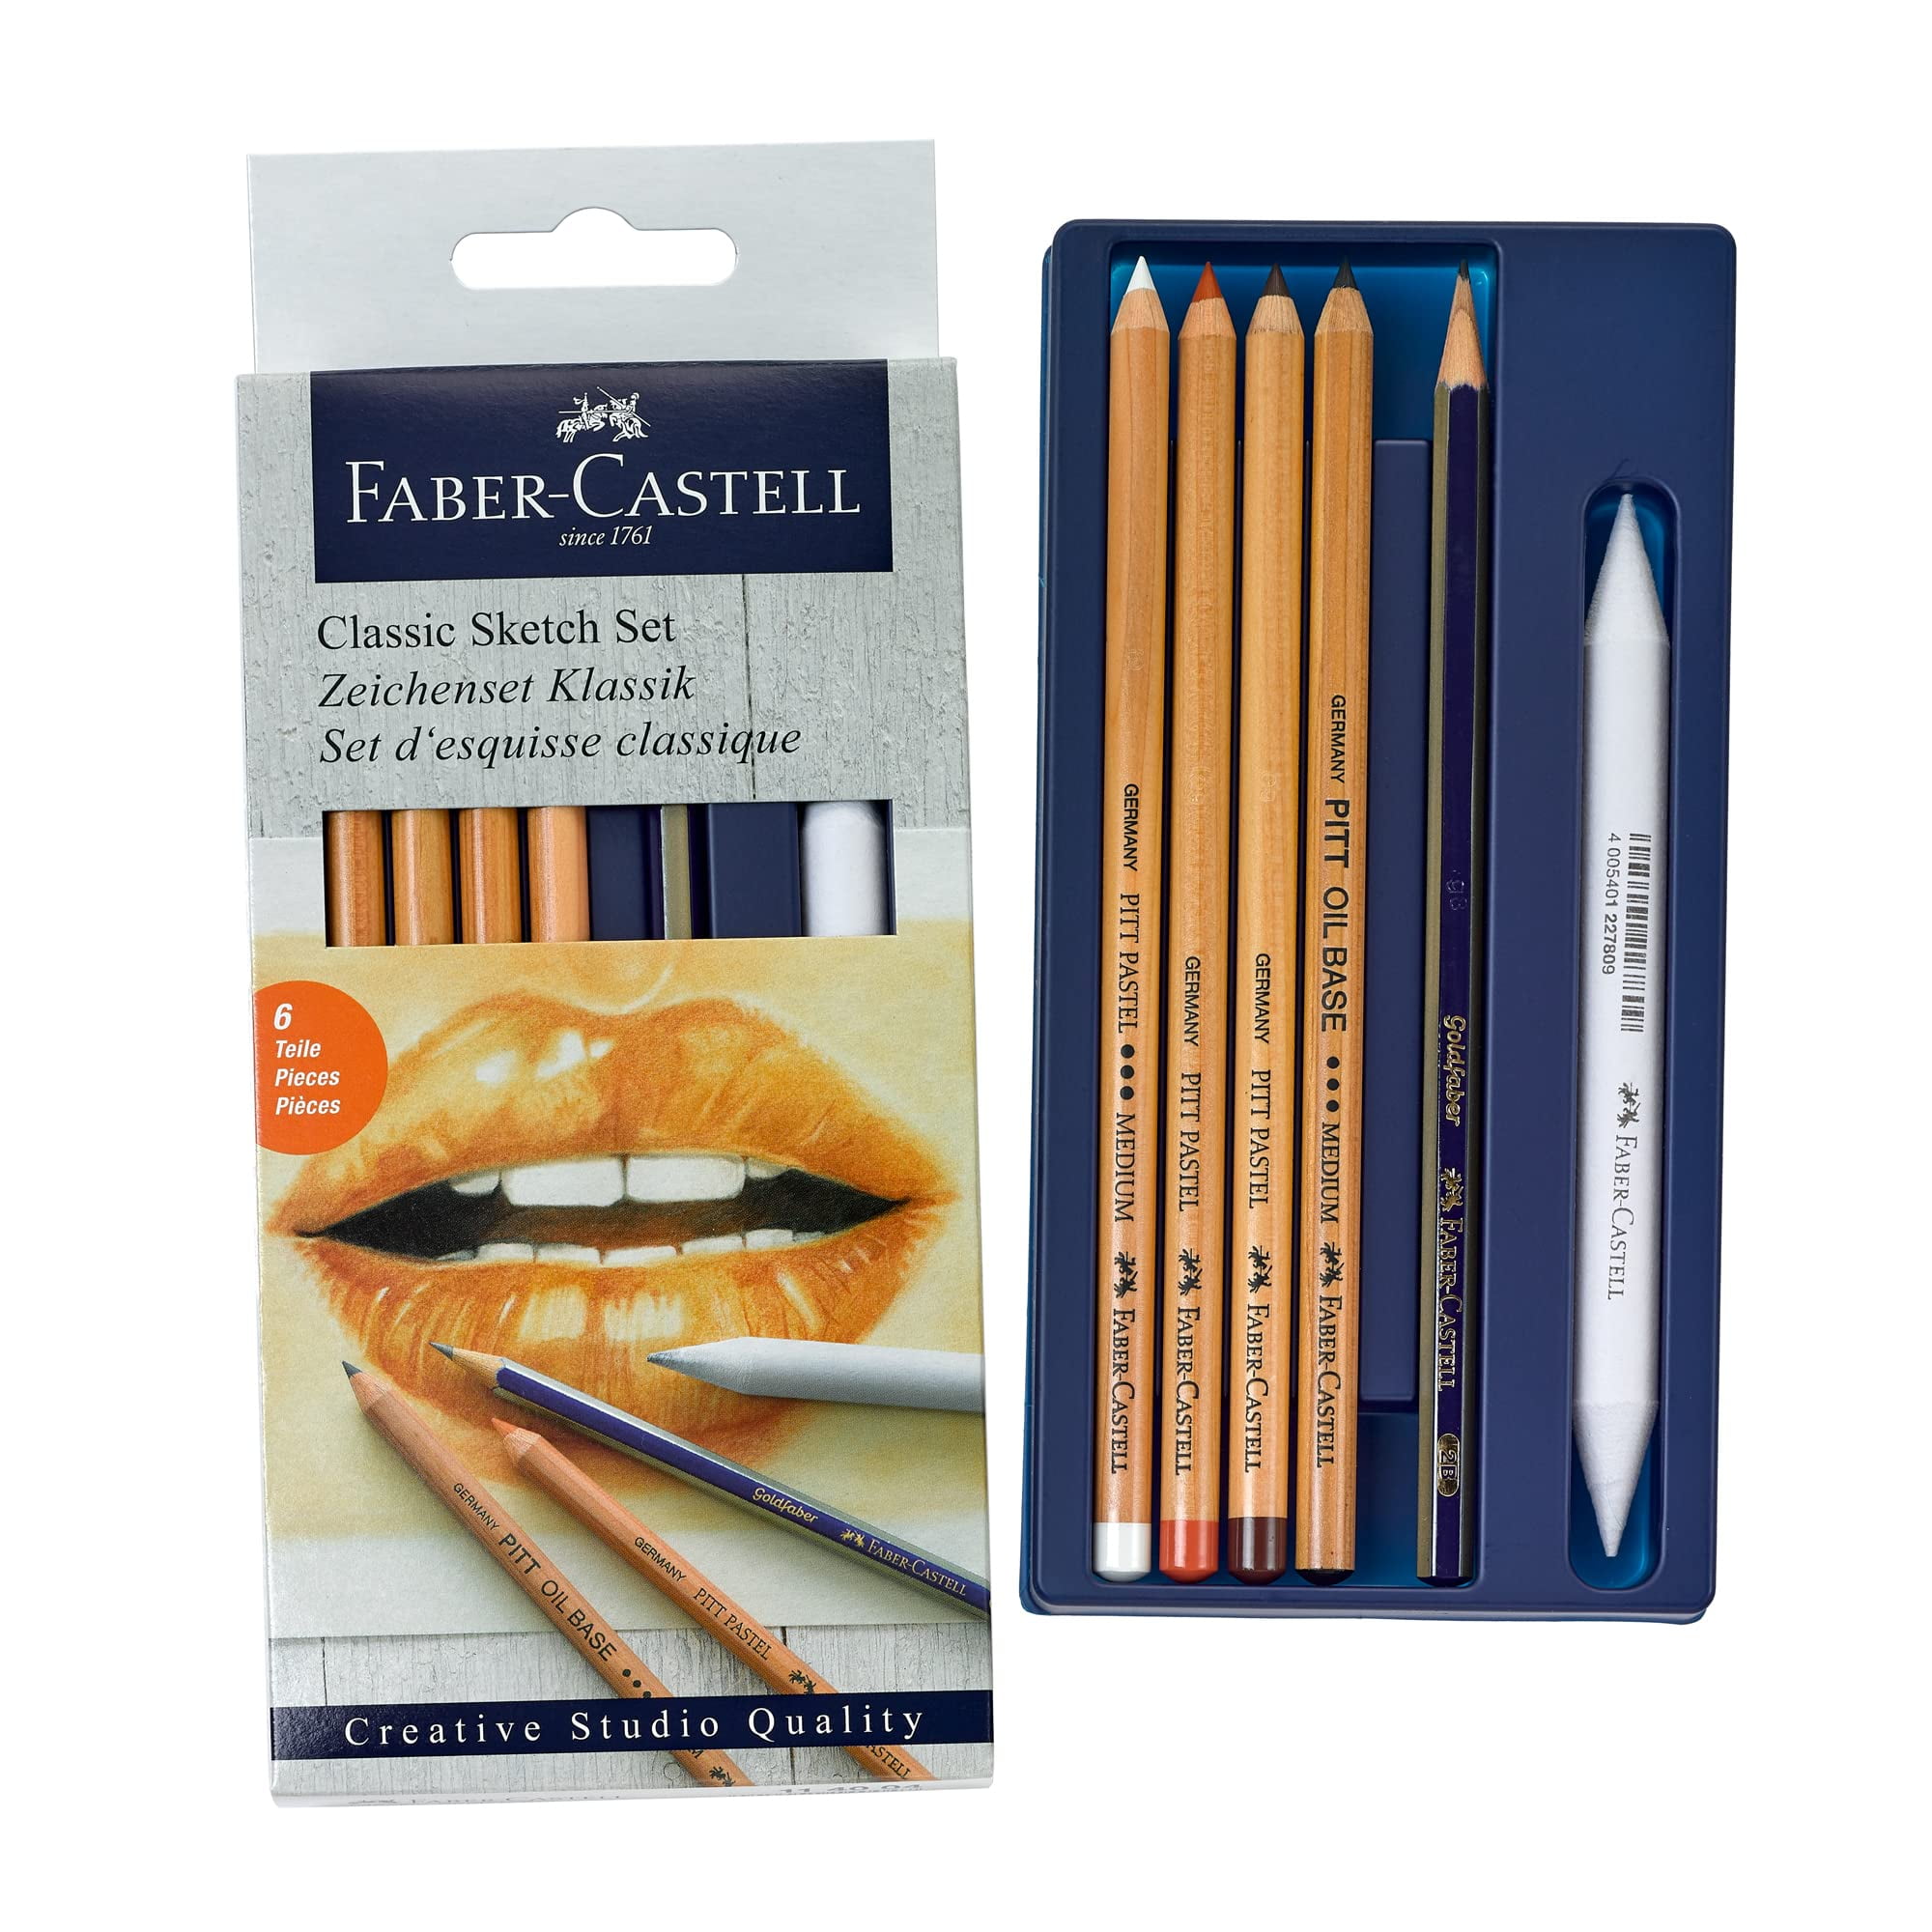 Faber-Castell Classic Sketch Set - 6 Piece Graphite & Pastel Pencil  Sketching Set